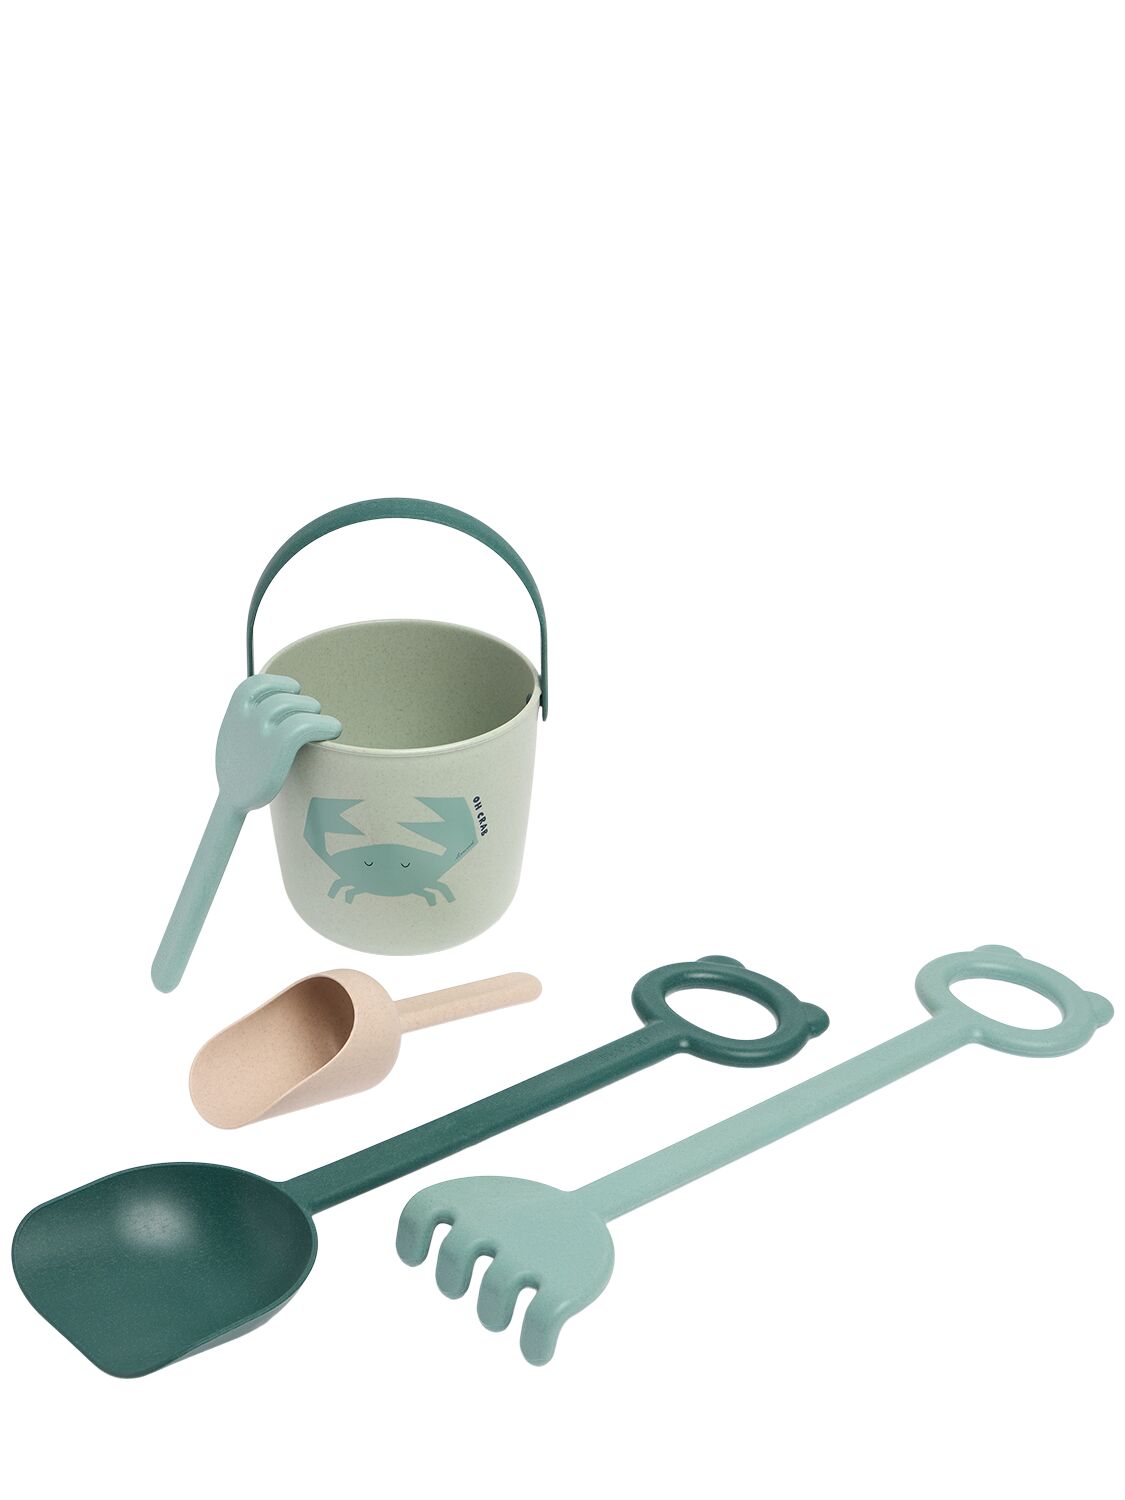 Image of Beach Tools & Bucket Set